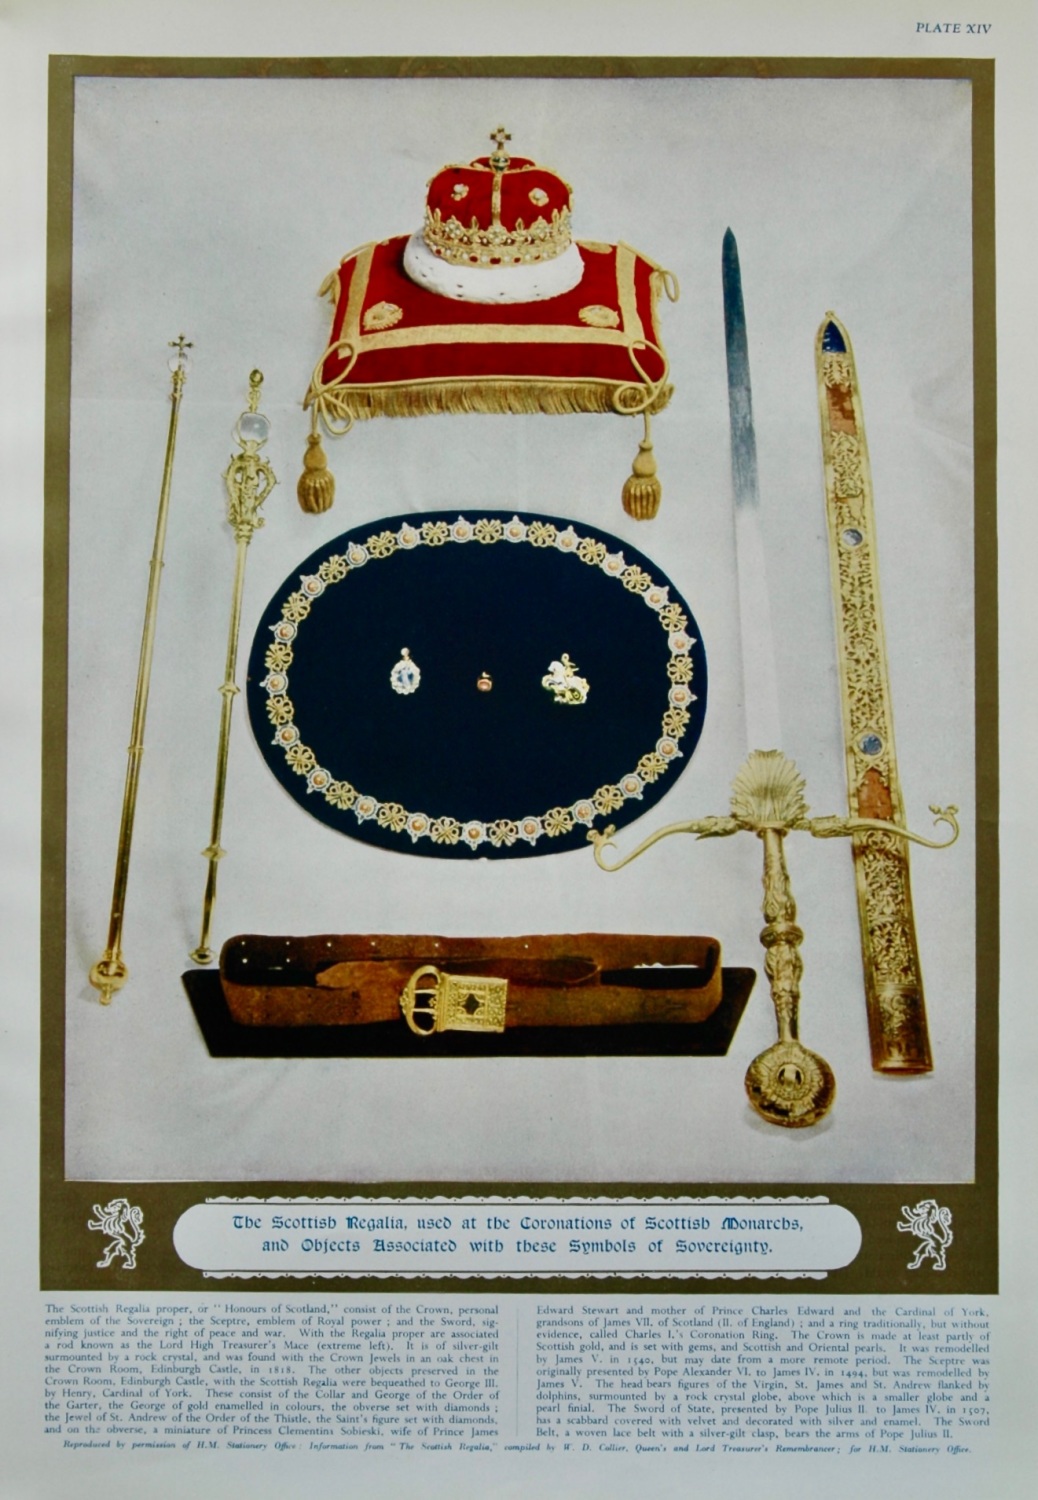 The Scottish Regalia, used at the Coronations of Scottish Monarchs, and obj